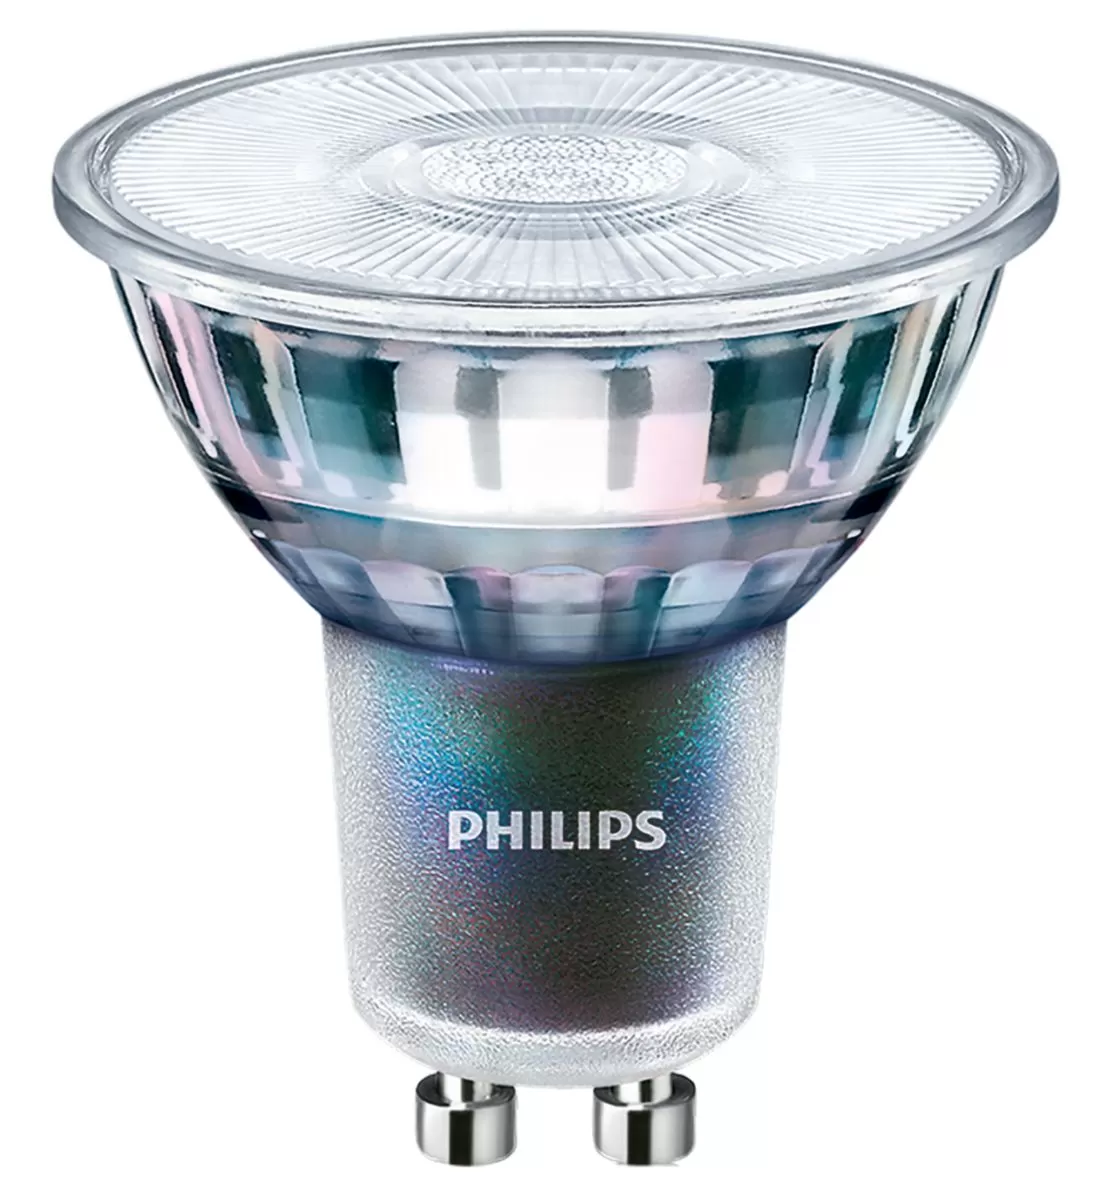 Signify MASTER LEDspot GU10 ExpertColor - LED-lamp/Multi-LED - Energieeffizienz-Label (EEL): A+ - Ähnlichste Farbtemperatur (Nom): 2700 K 70755500